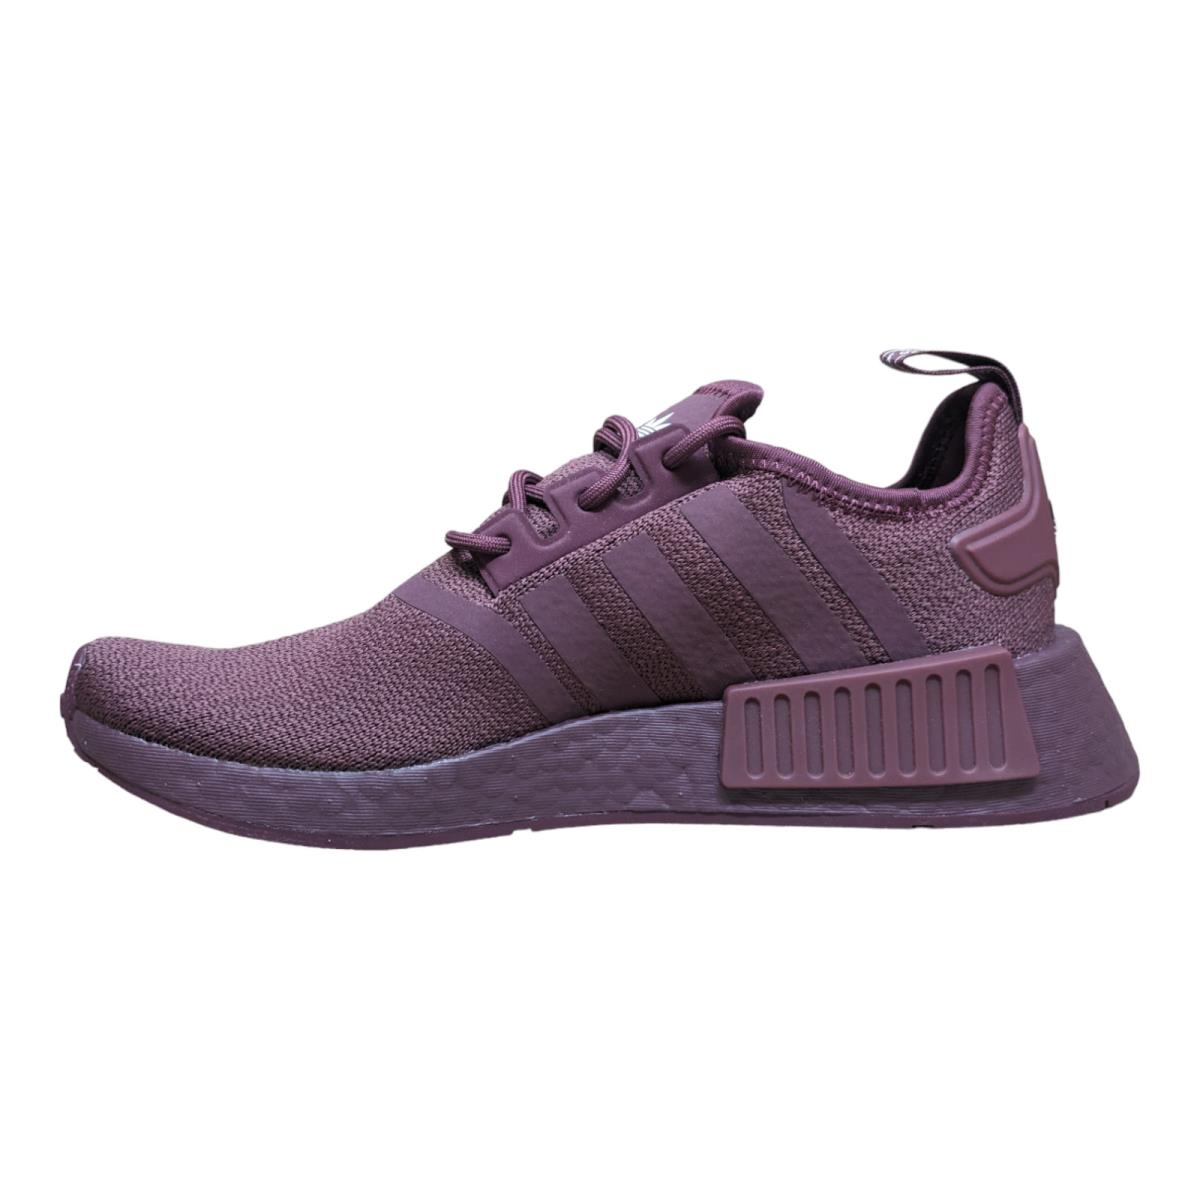 Adidas Women`s Nmd R1 Athletic Shoe - US Shoe Size 6.5 Purple - GX8384 - Purple